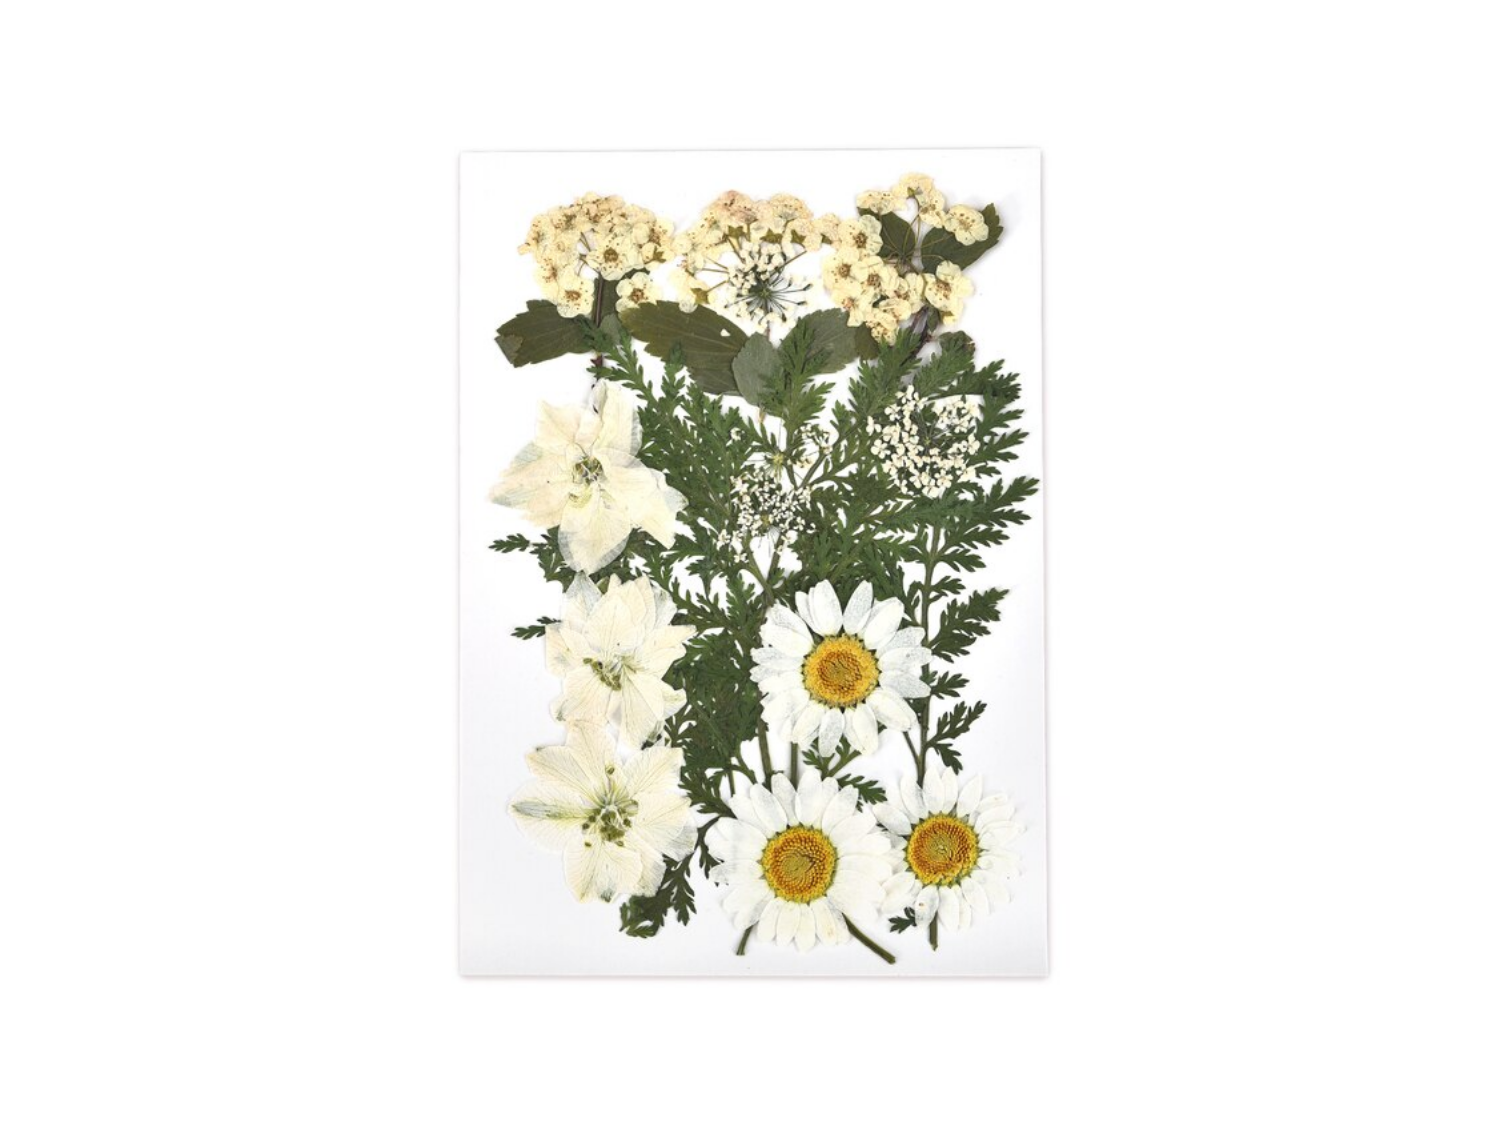 kokoart Fiori secchi  Chrysanthemum Paludosum, Narciso, Delphinium bianco,  Lace Flower, Pino Artemisia